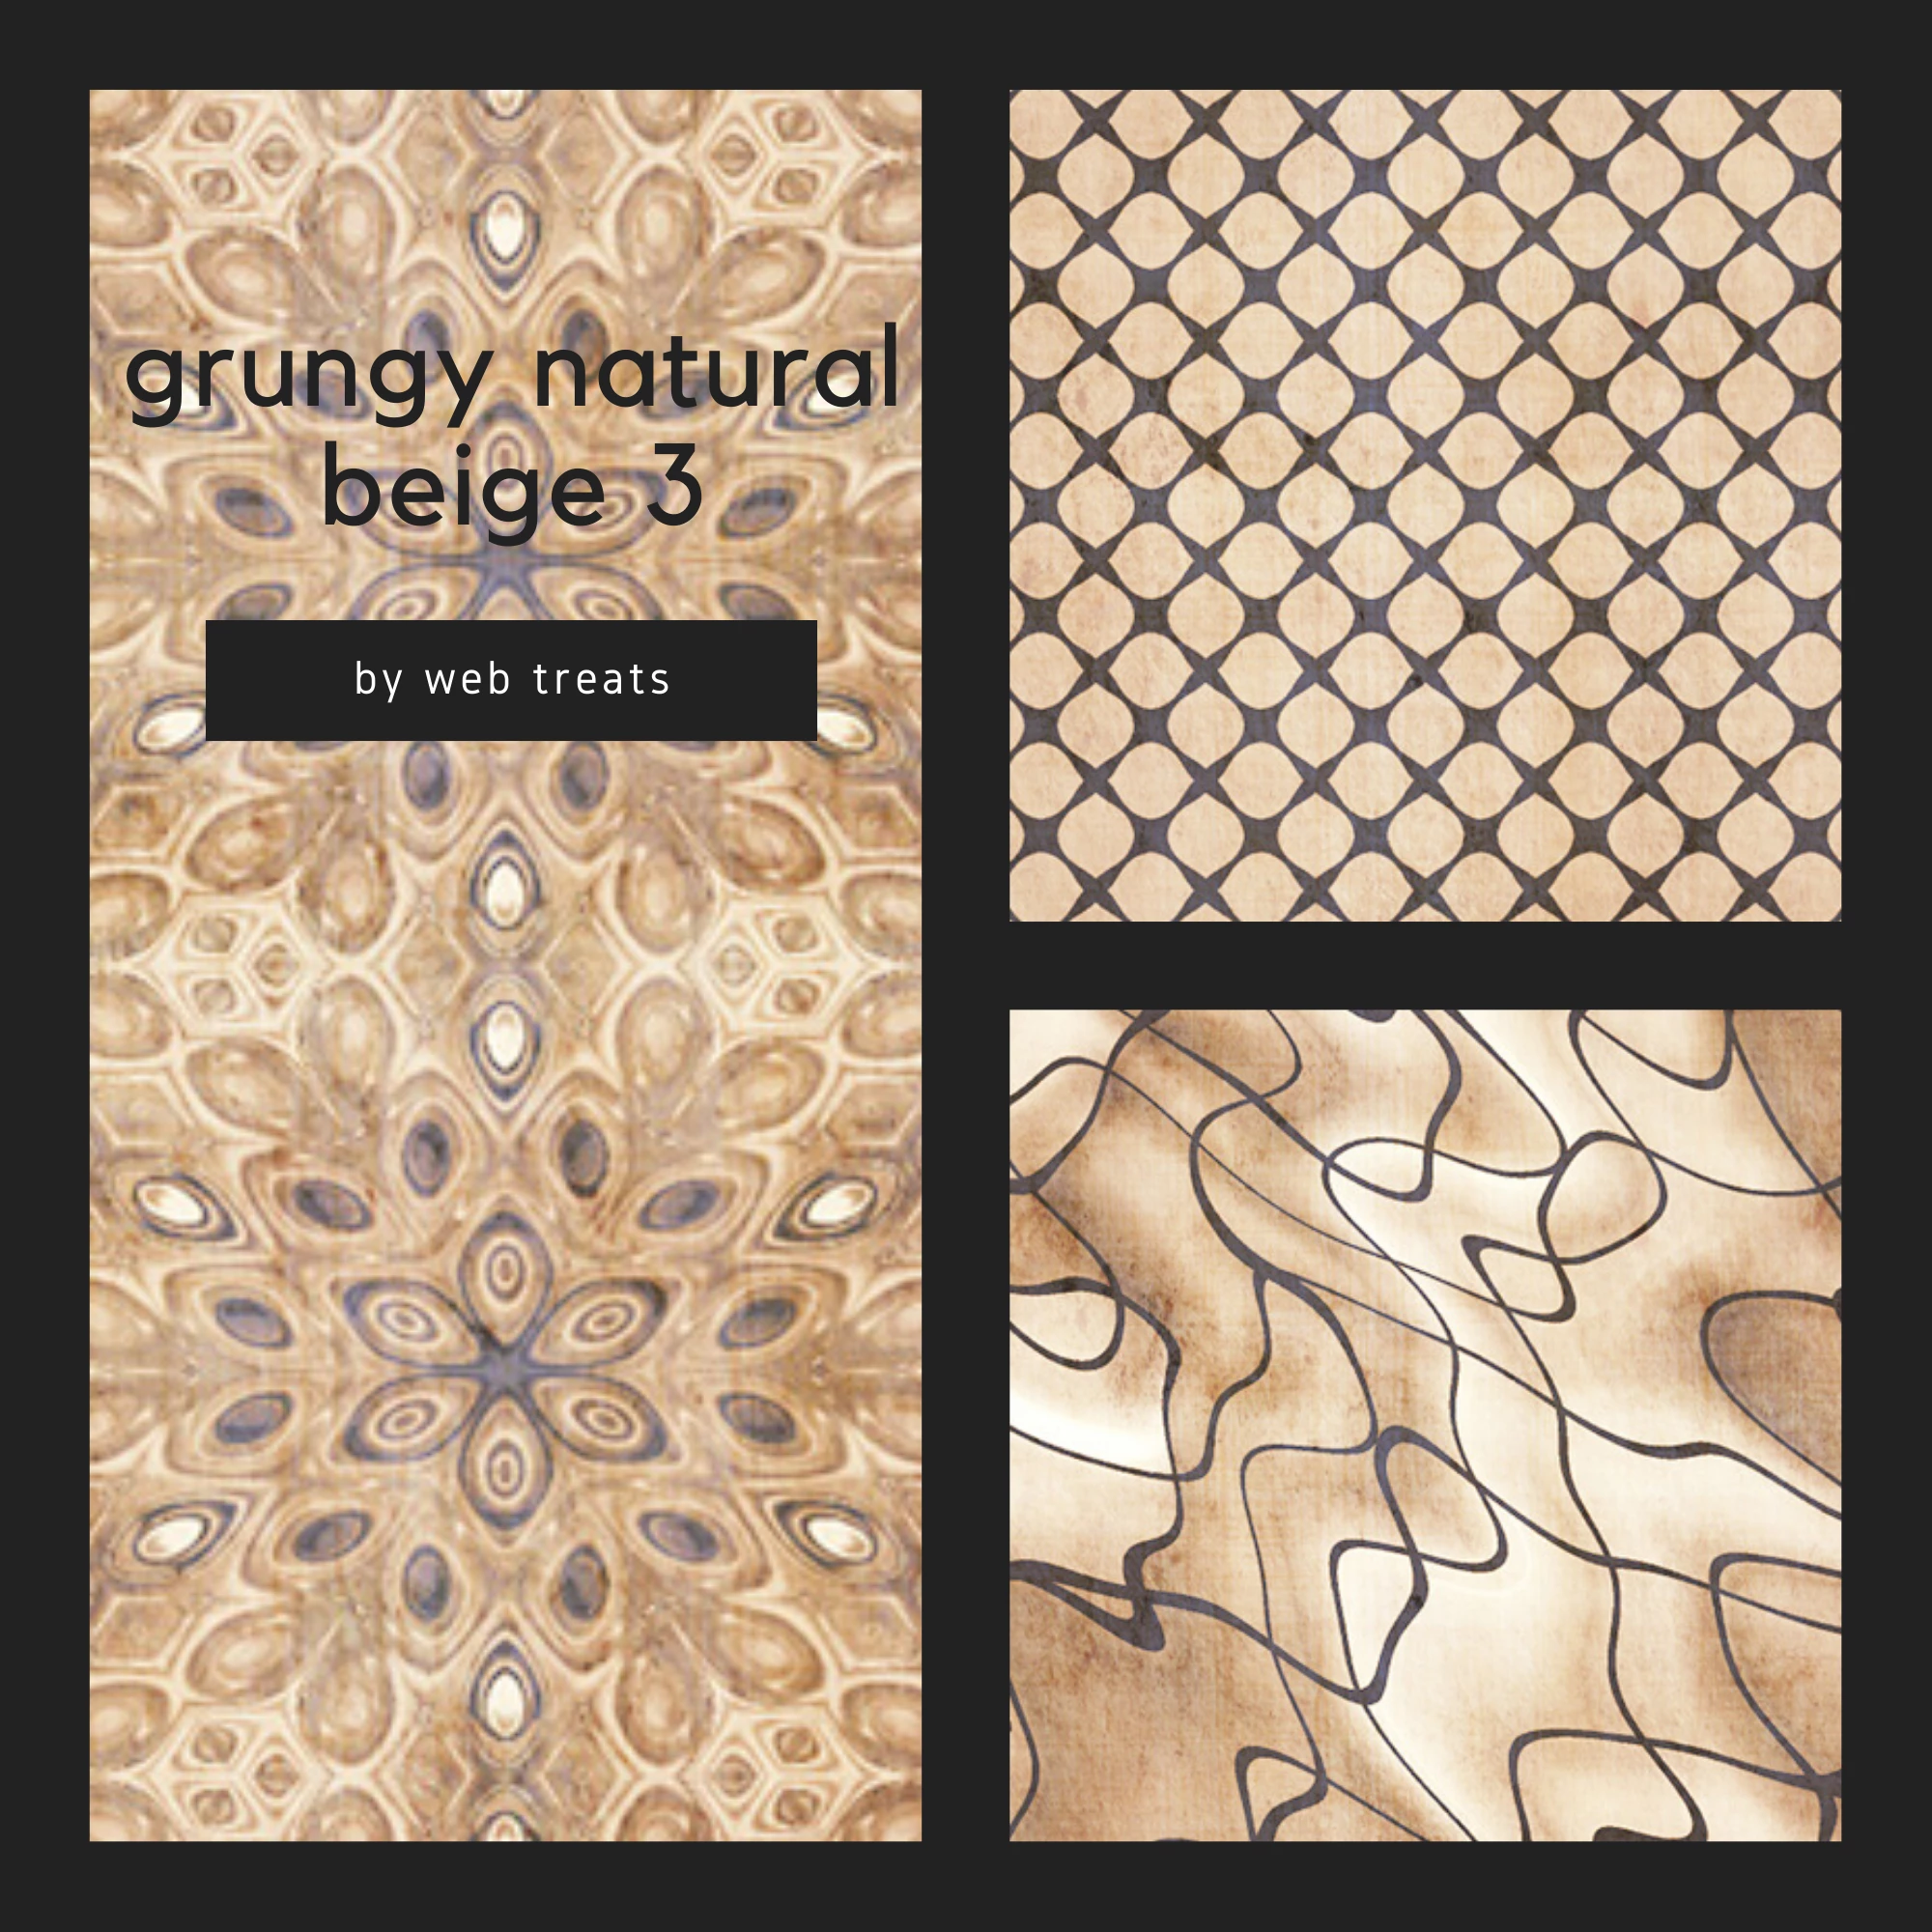 grungy natural beige textures 3